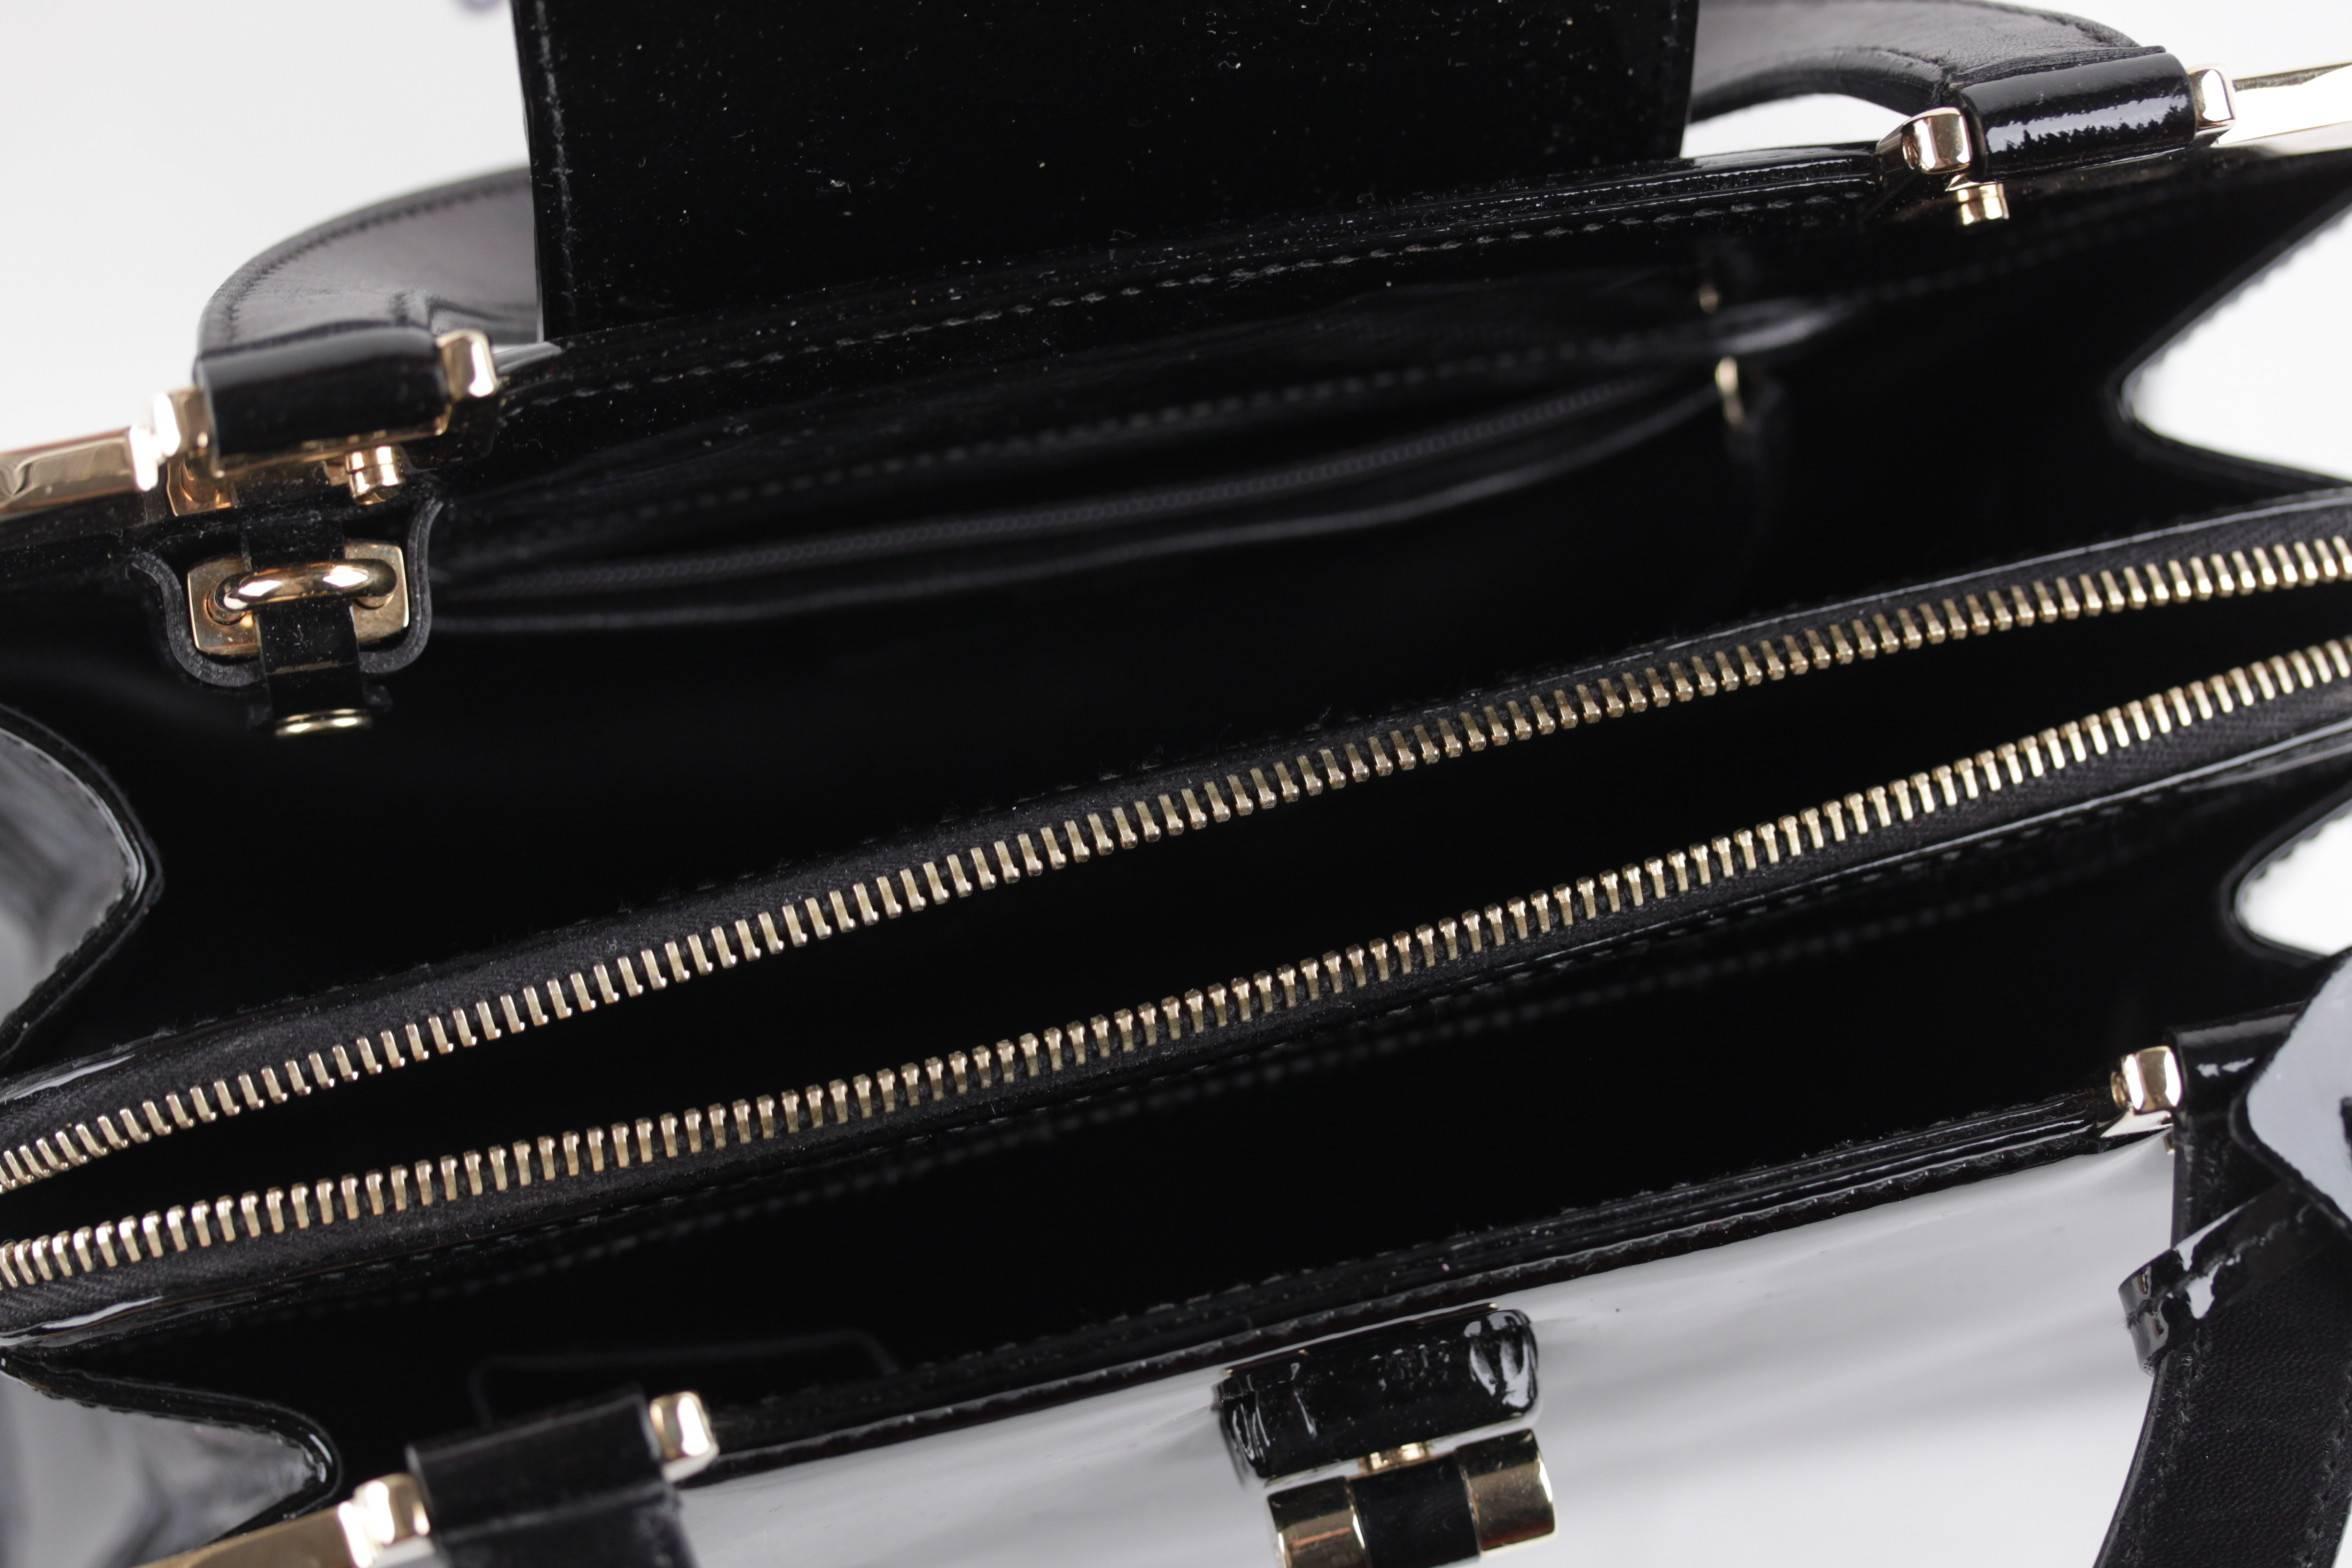 Women's YVES SAINT LAURENT Black Patent Leather UPTOWN Bag HANDBAG Satchel